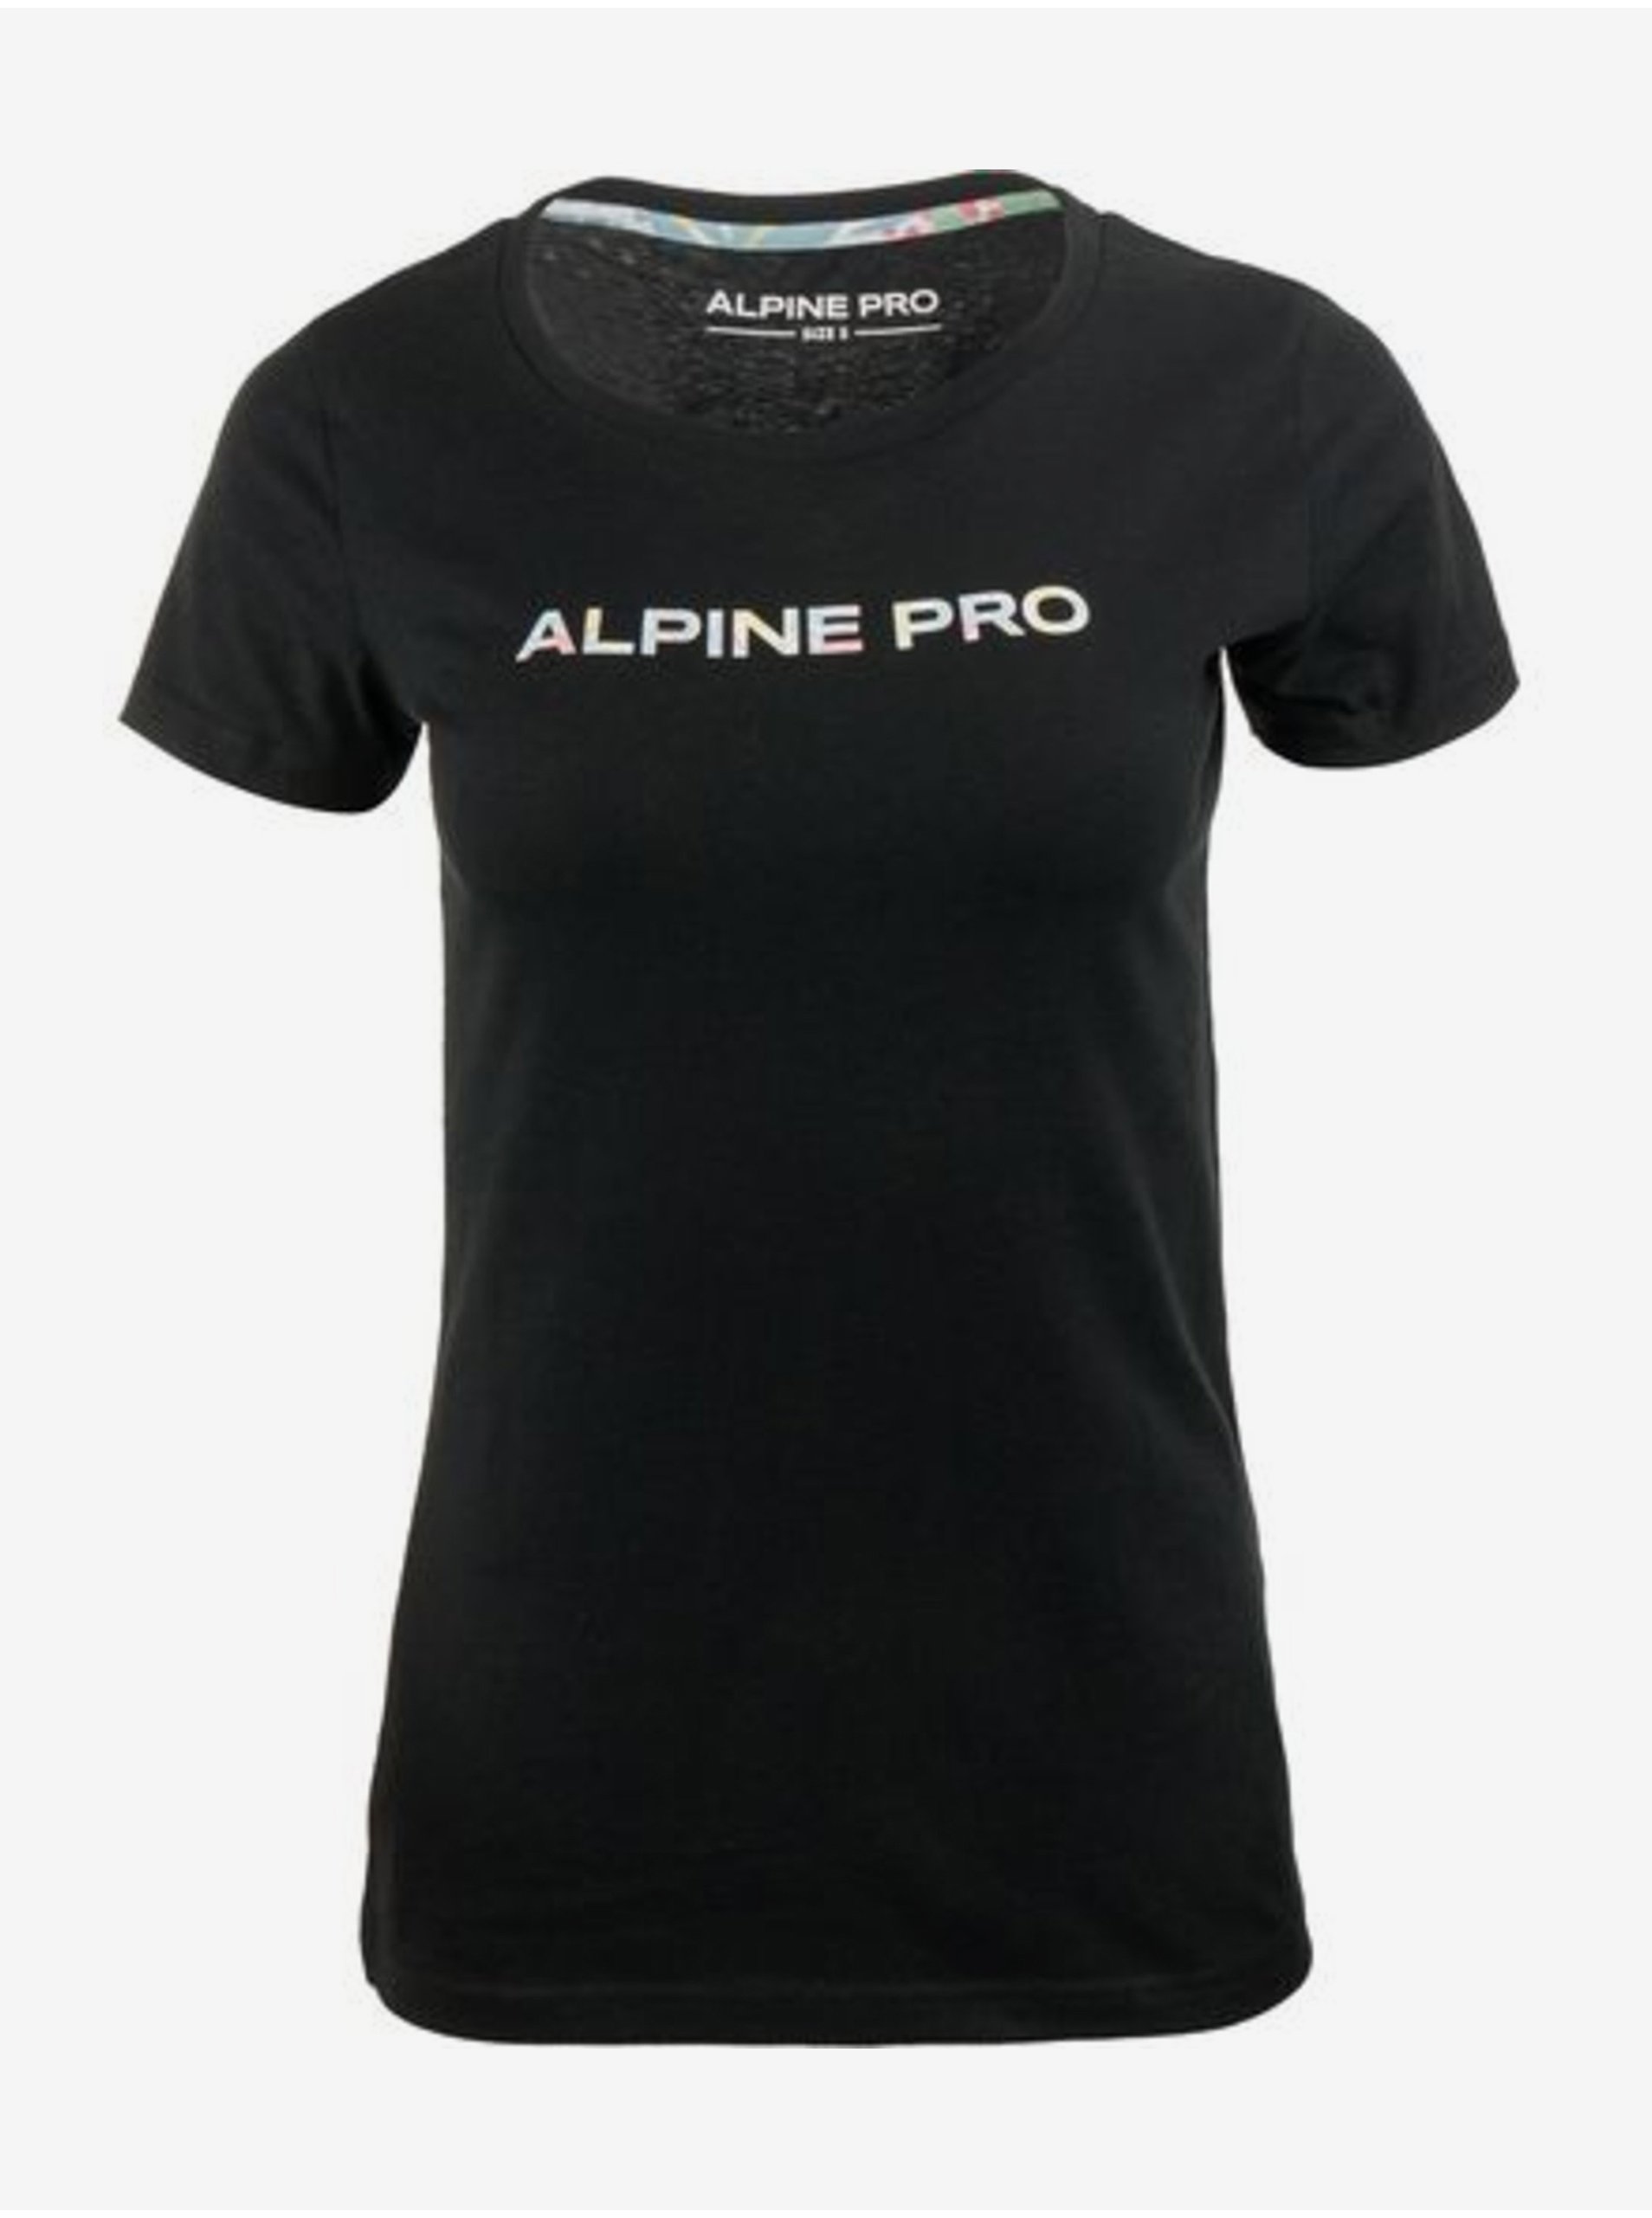 Lacno Čierne dámske tričko s nápisom ALPINE PRO Gabora